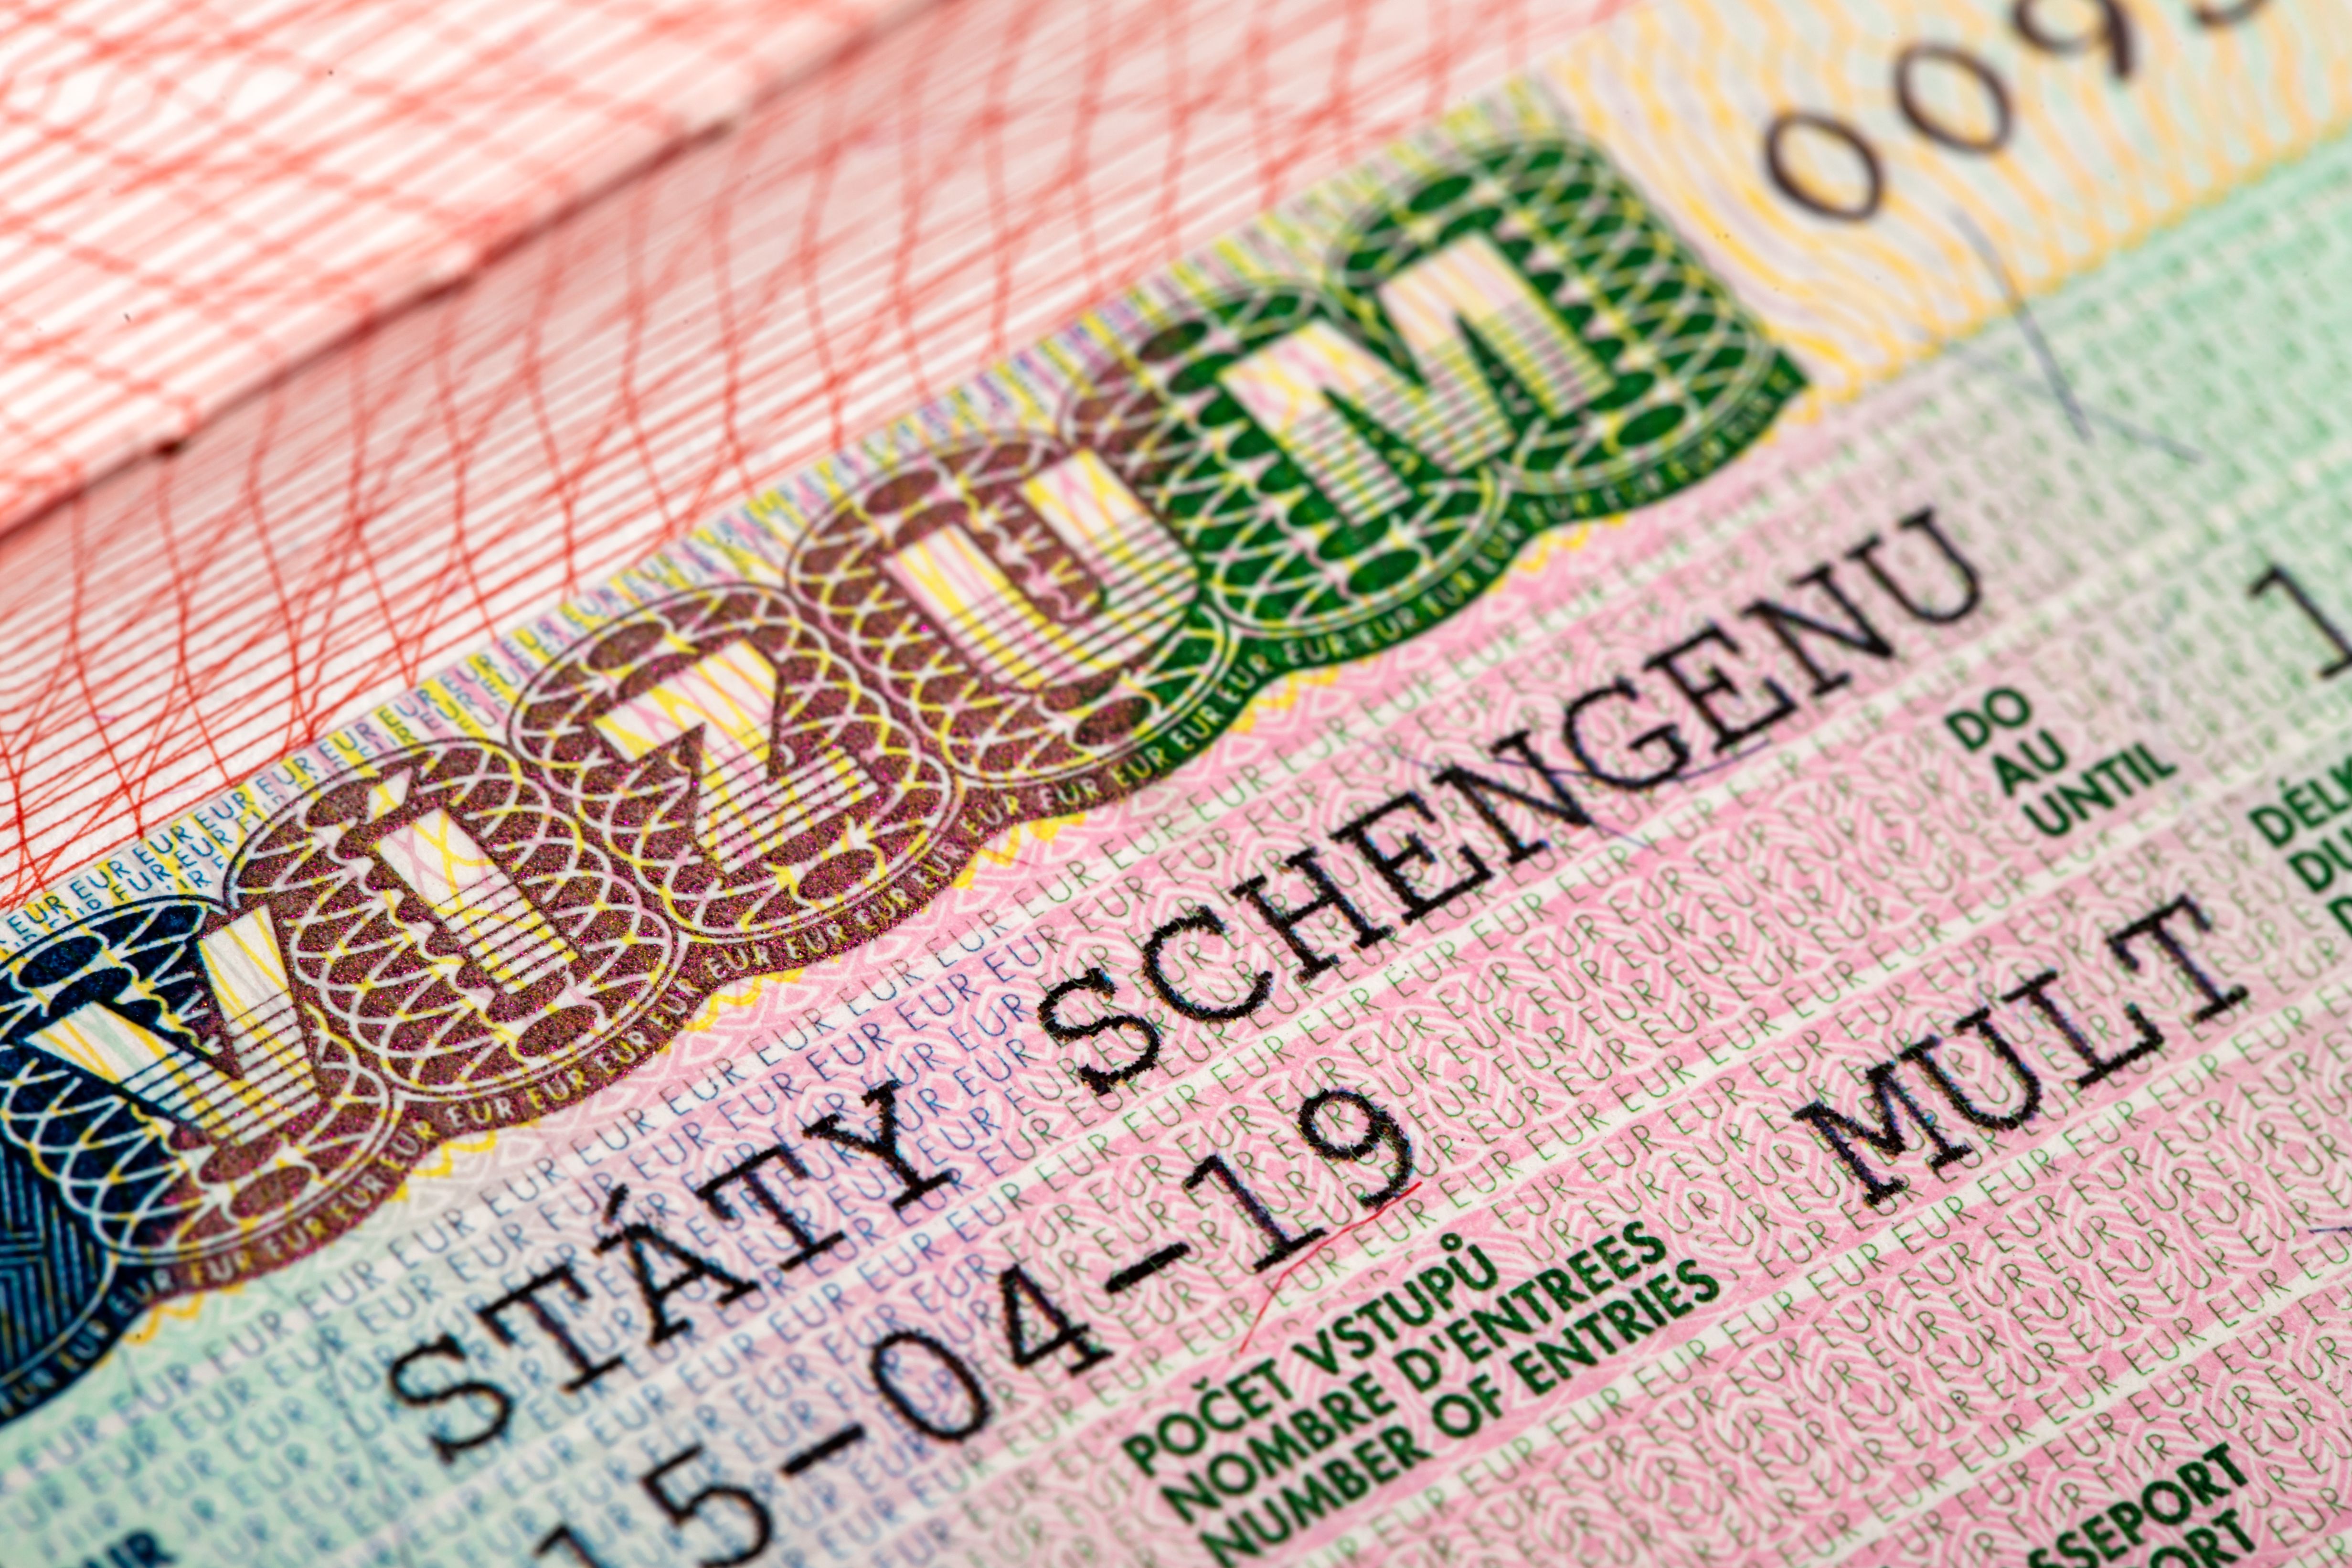 European Schengen zone visa in passport,